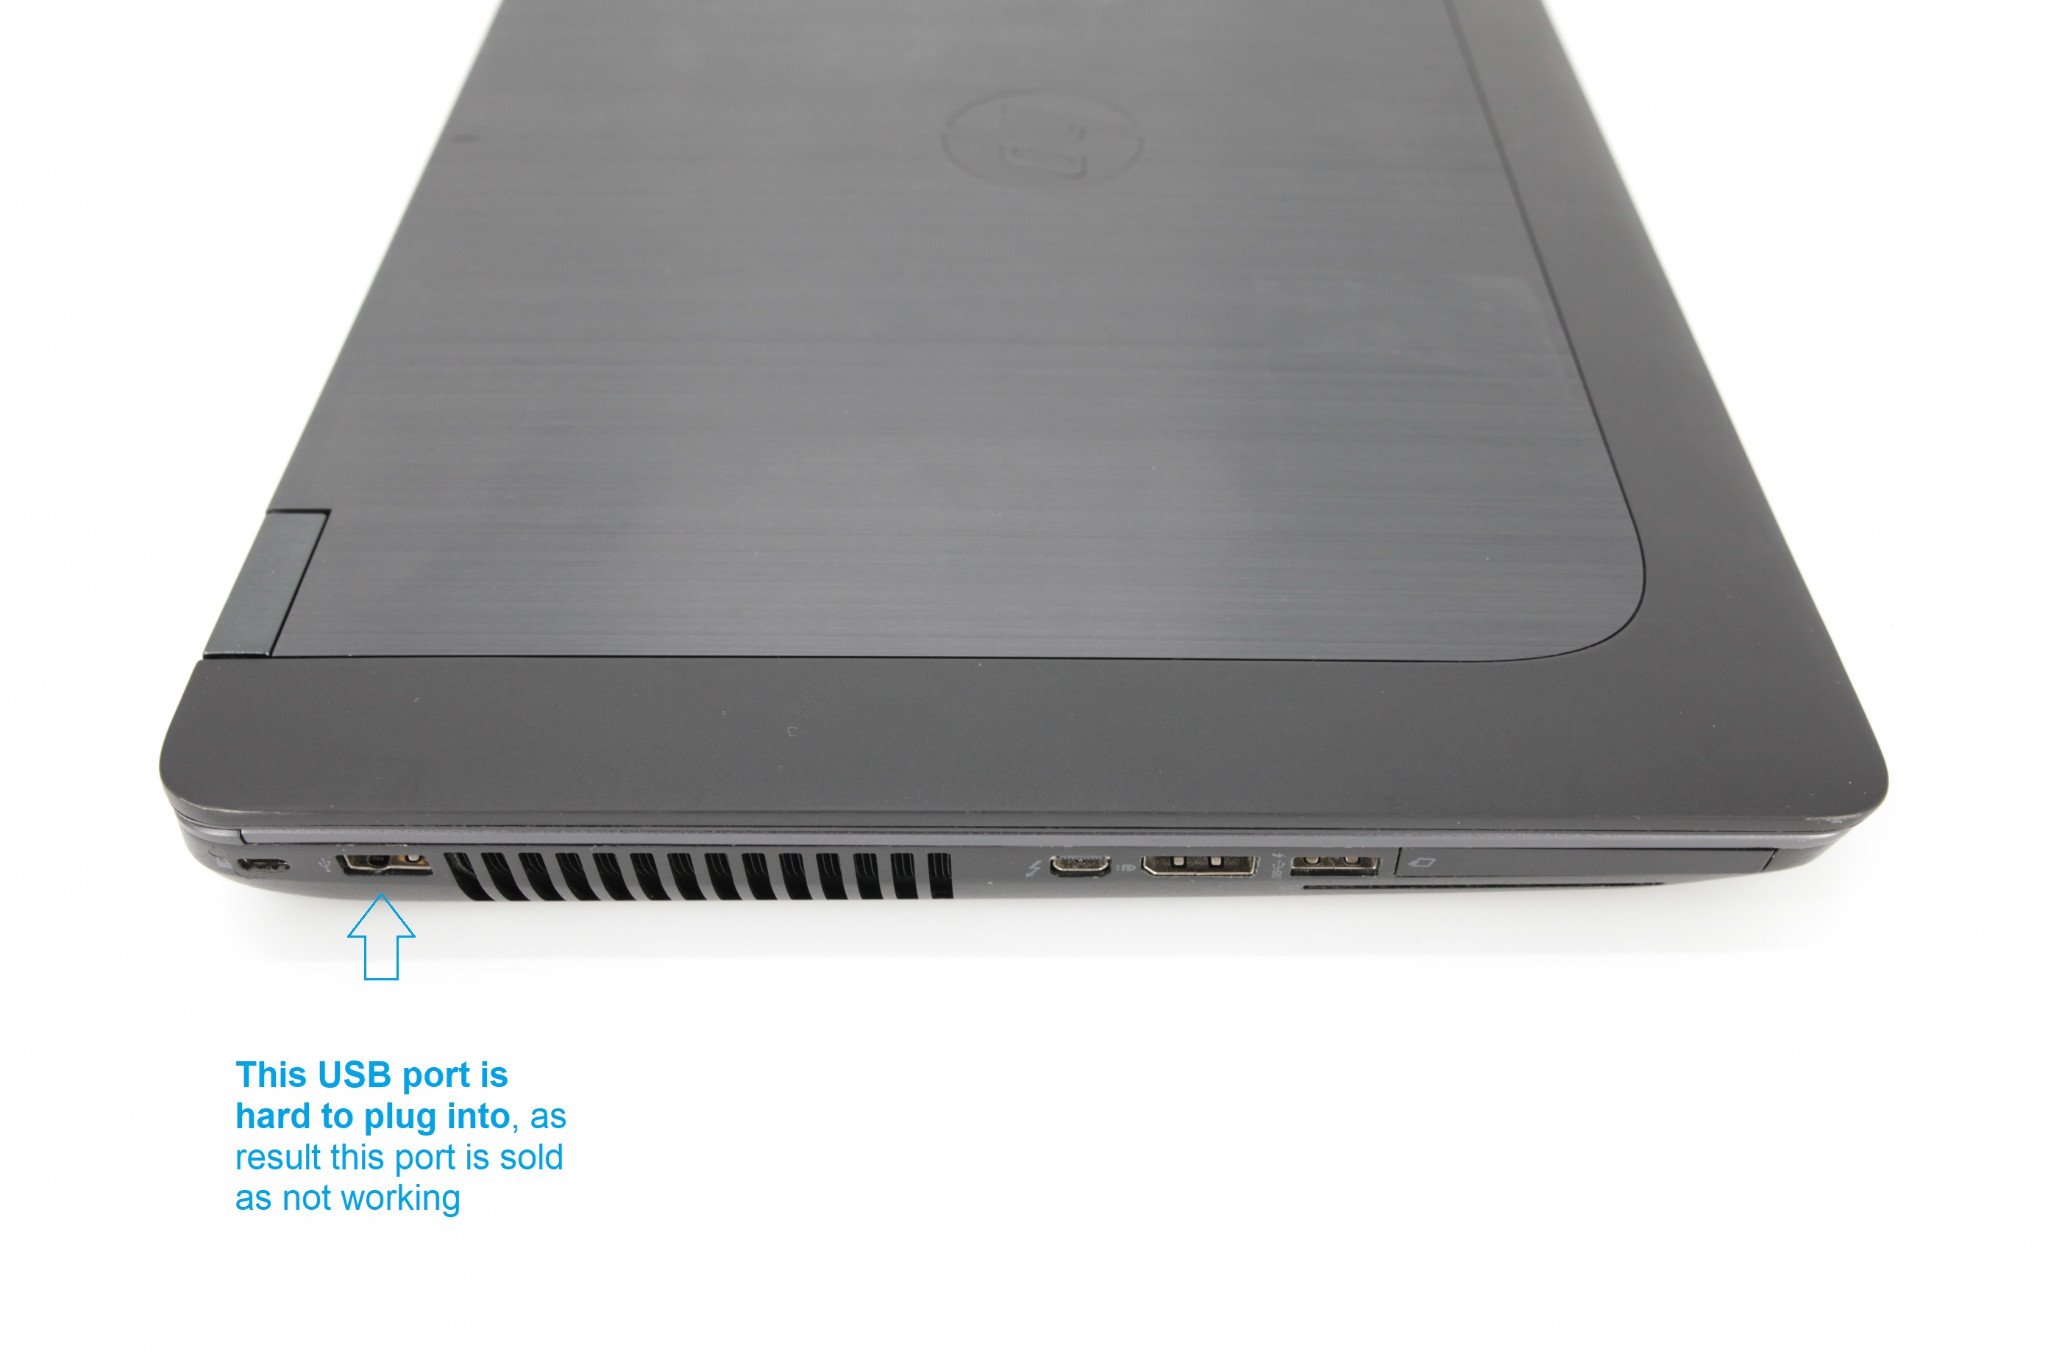 HP ZBook 15 G2 CAD Laptop: 16GB RAM, 4th Gen Core i7, 256GB, Warranty, VAT - CruiseTech